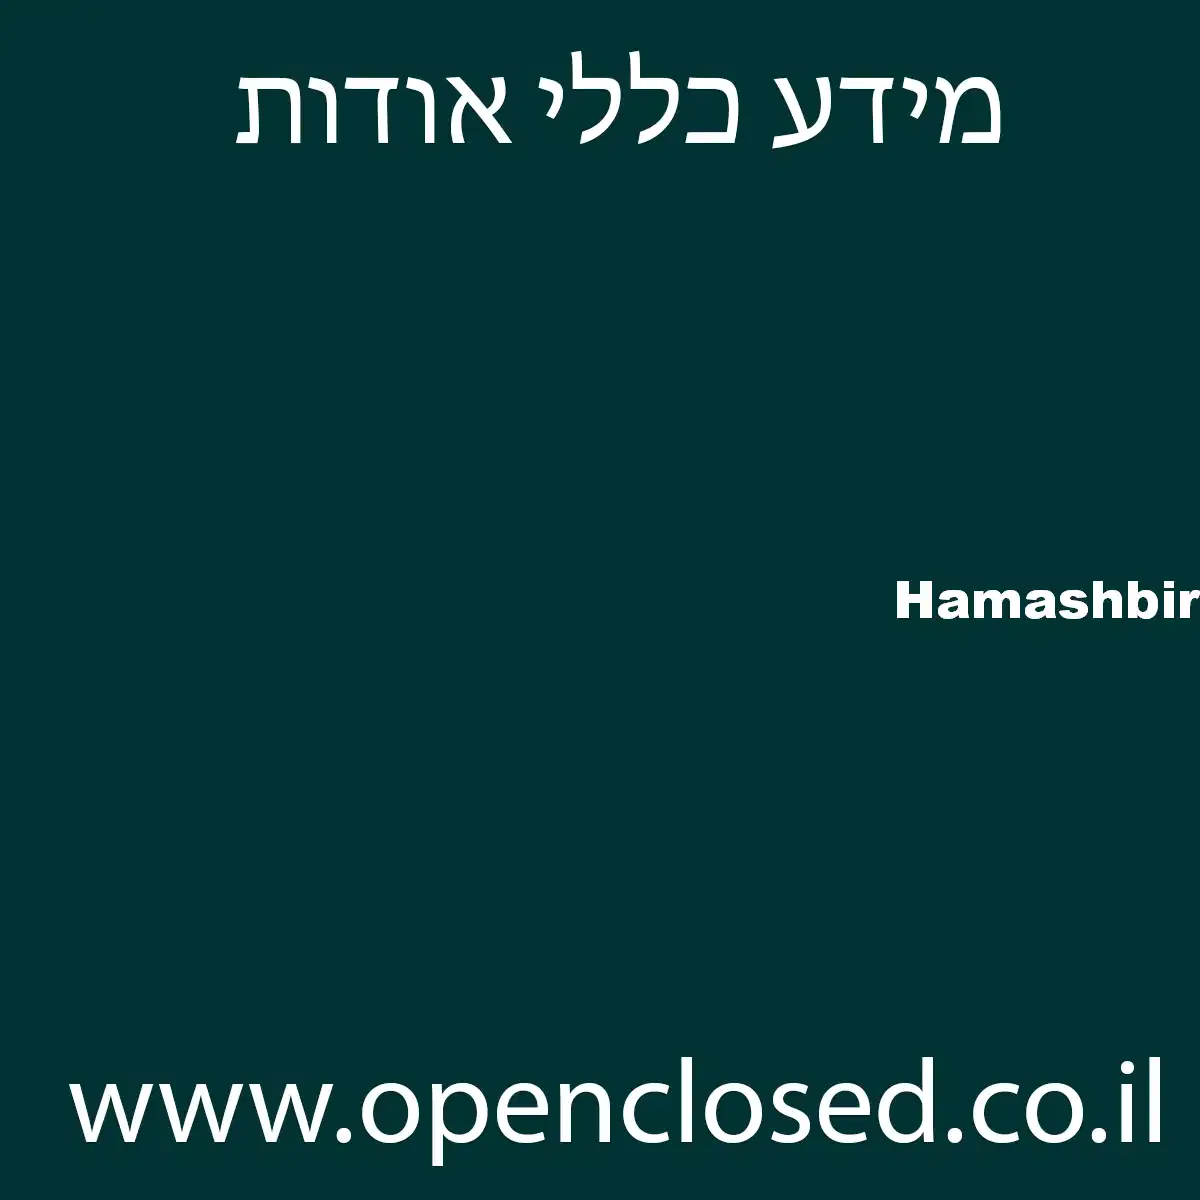 Hamashbir